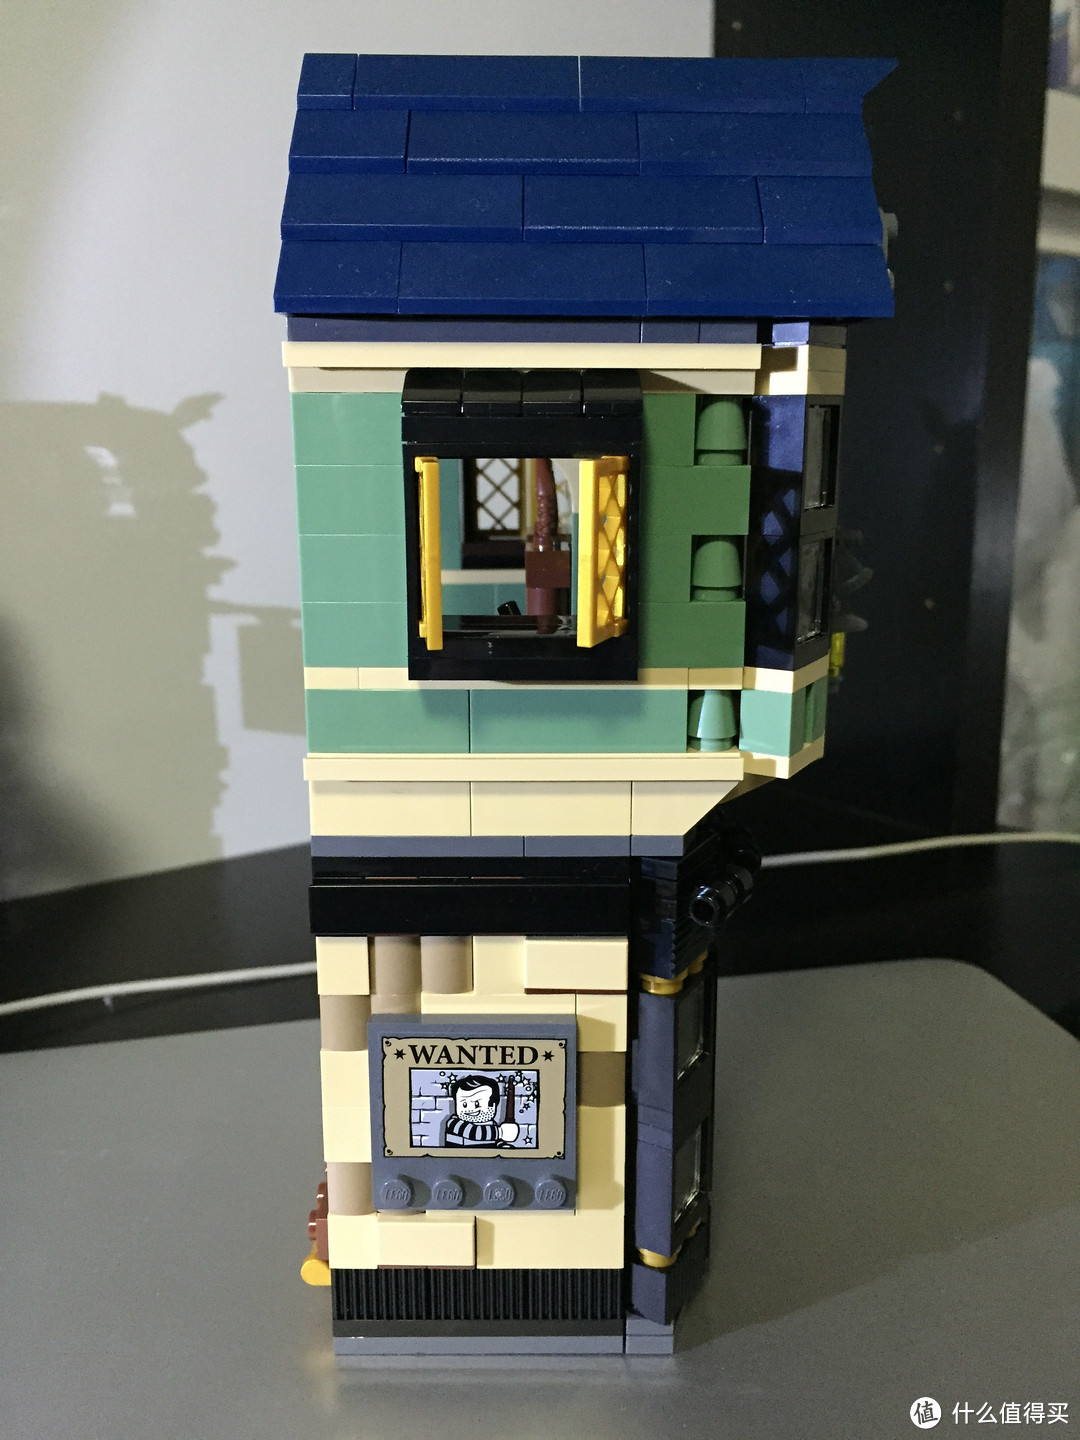 LEGO 乐高 10217 哈利波特系列 对角巷